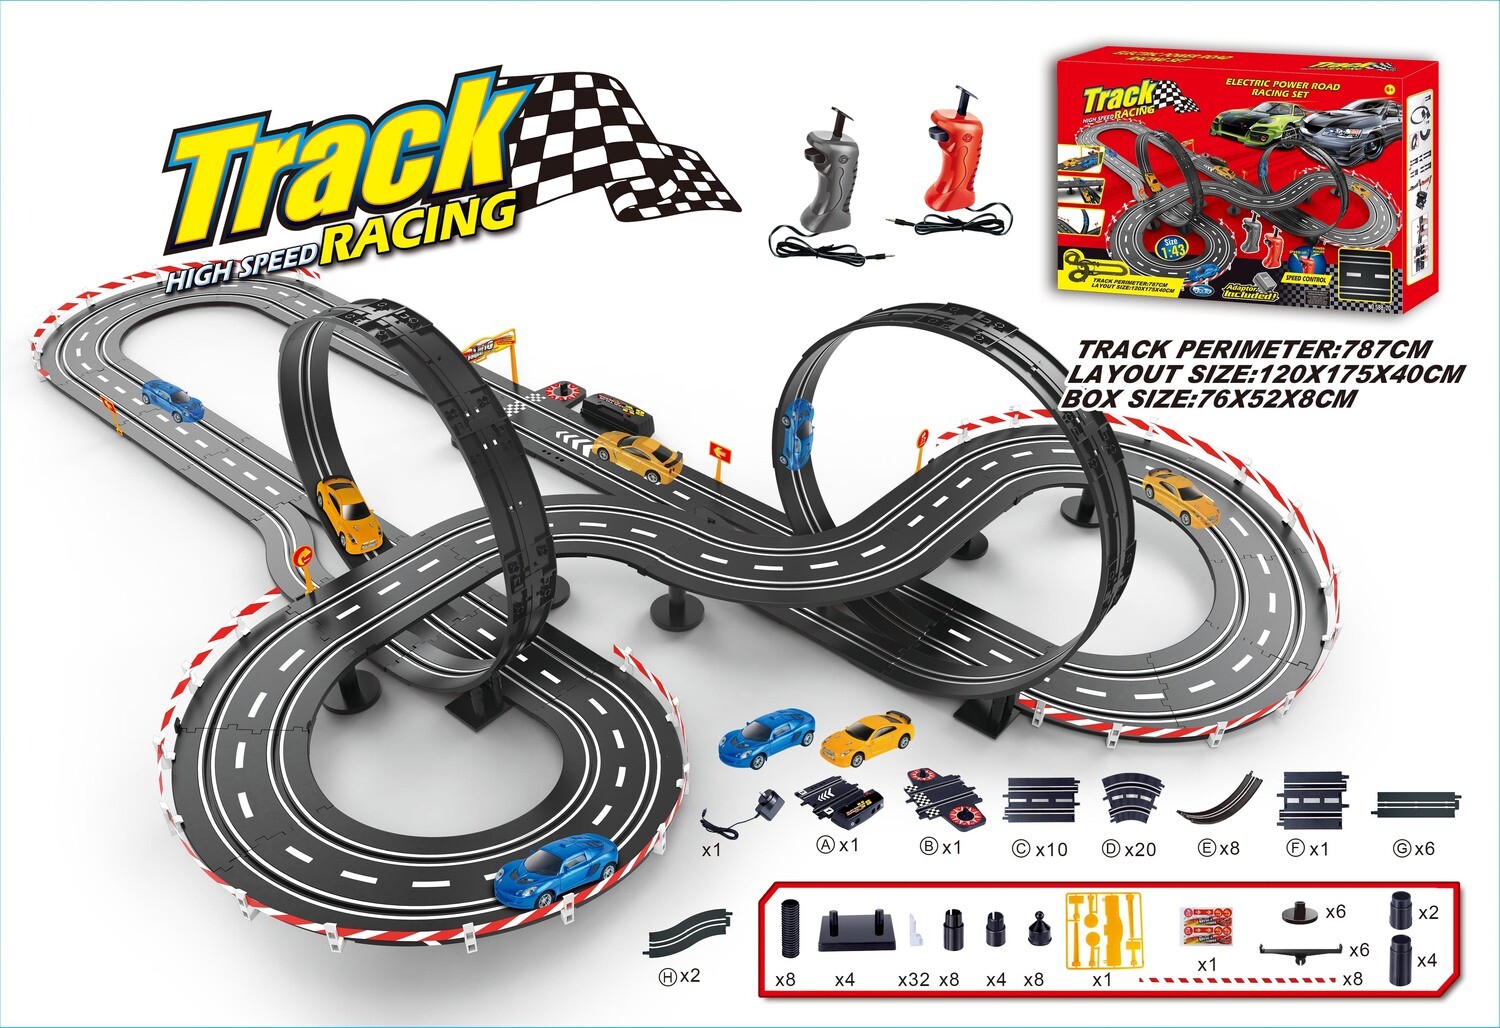 1:43 High Speed Track Racing - Premium